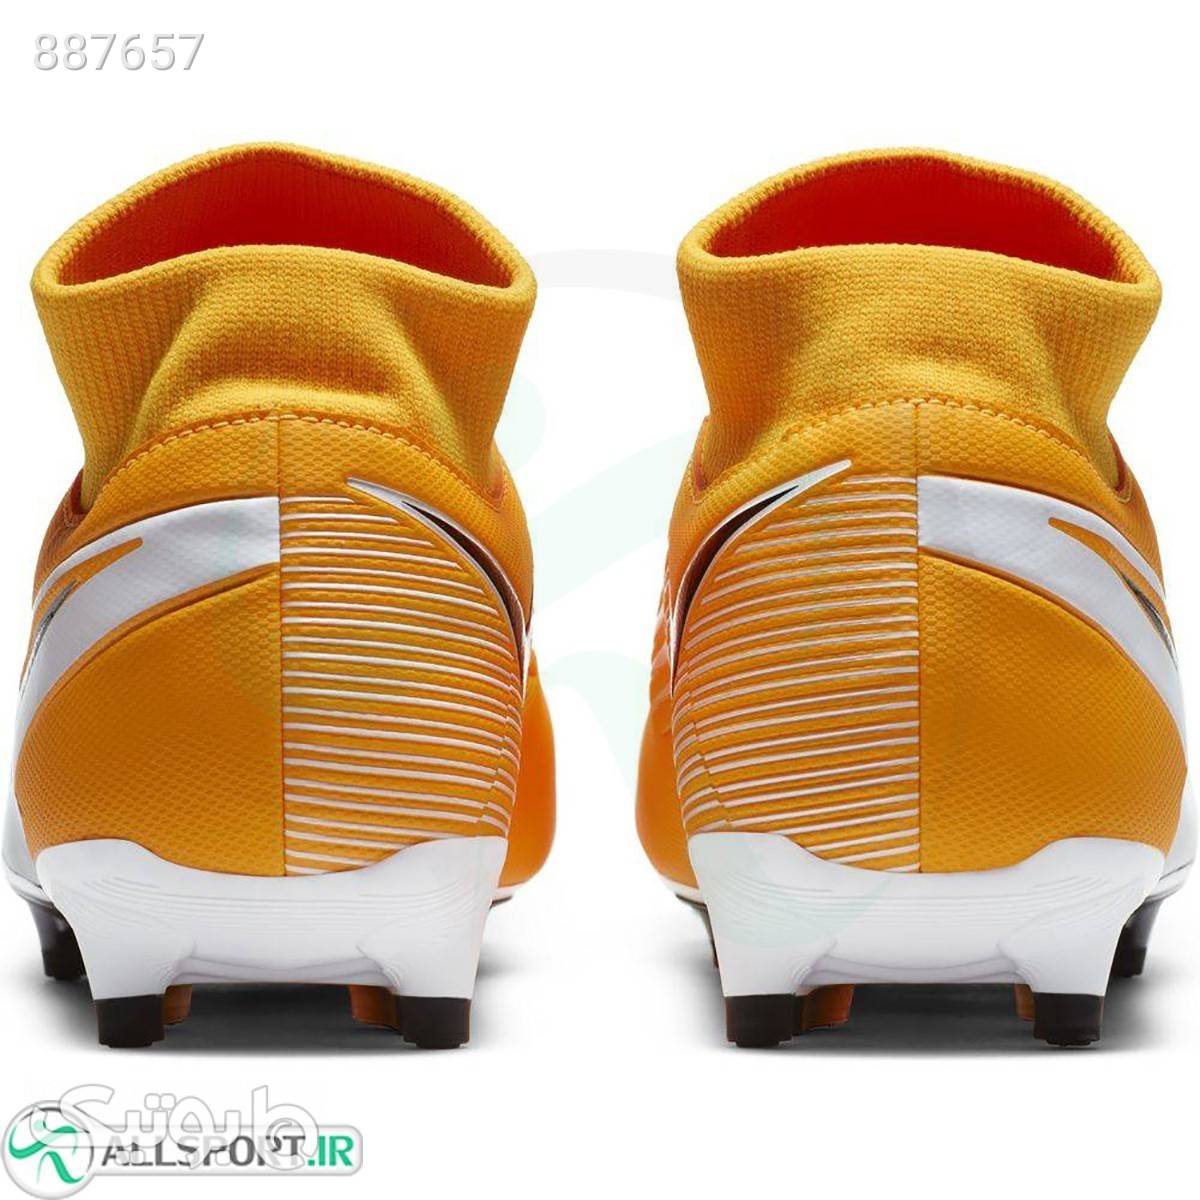 کفش فوتبال نایک مرکوریال Nike Mercurial Superfly 7 Academy M FGMG AT7946801